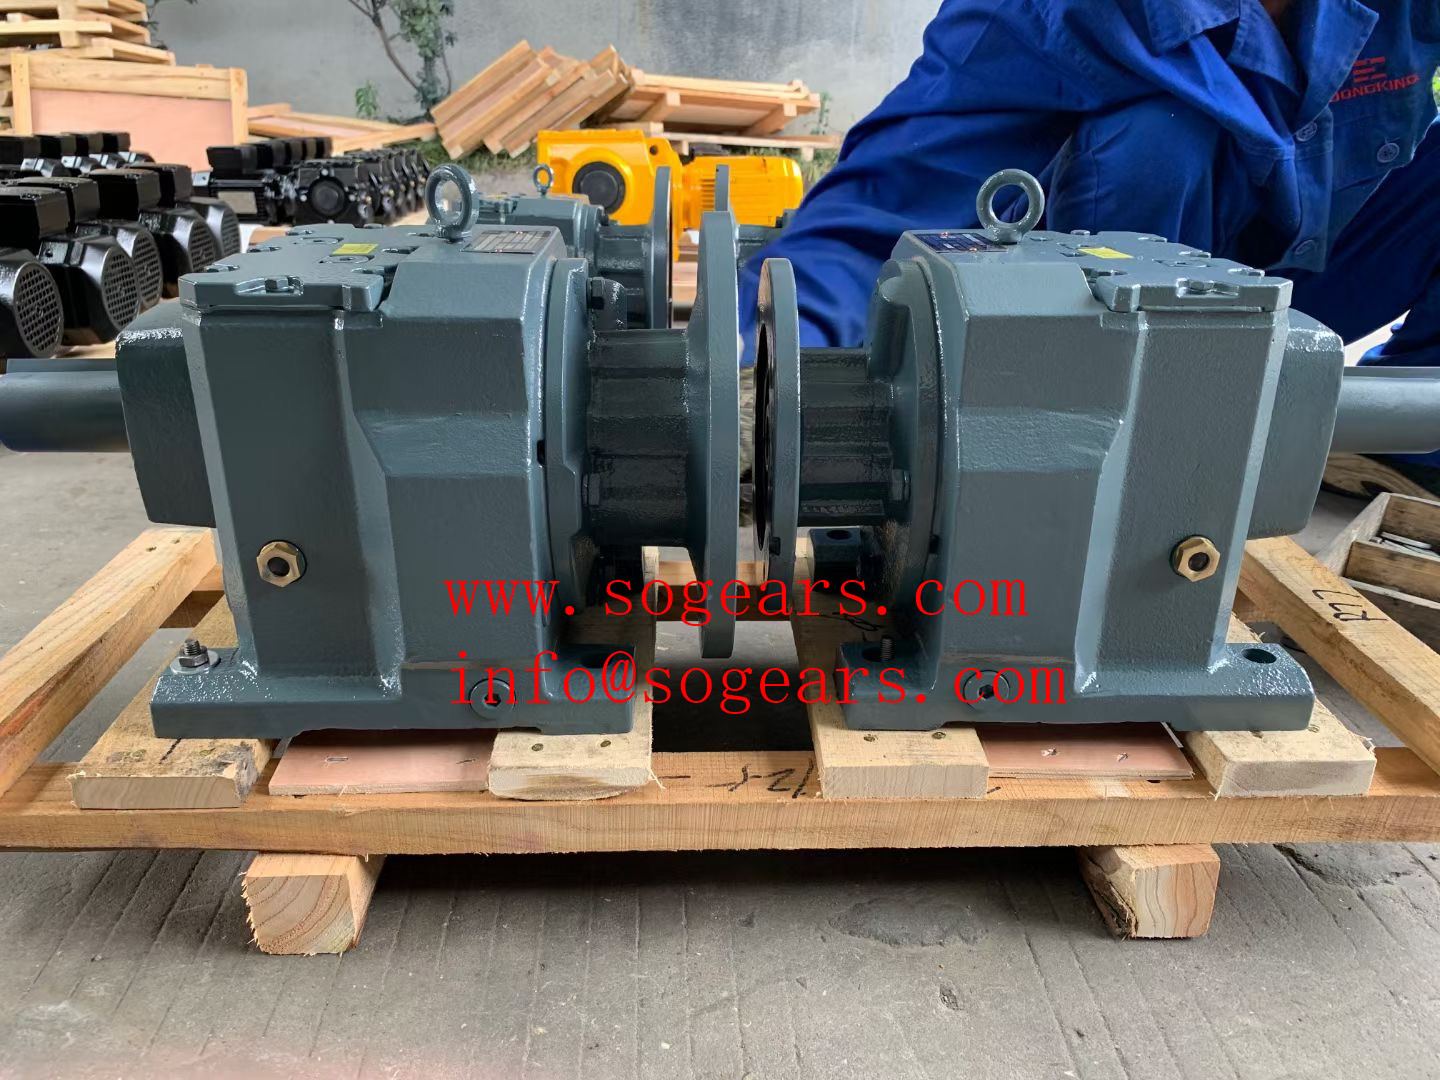 Reductiemotor 1 8 pk 220 rpm elektromotor leverancier in China